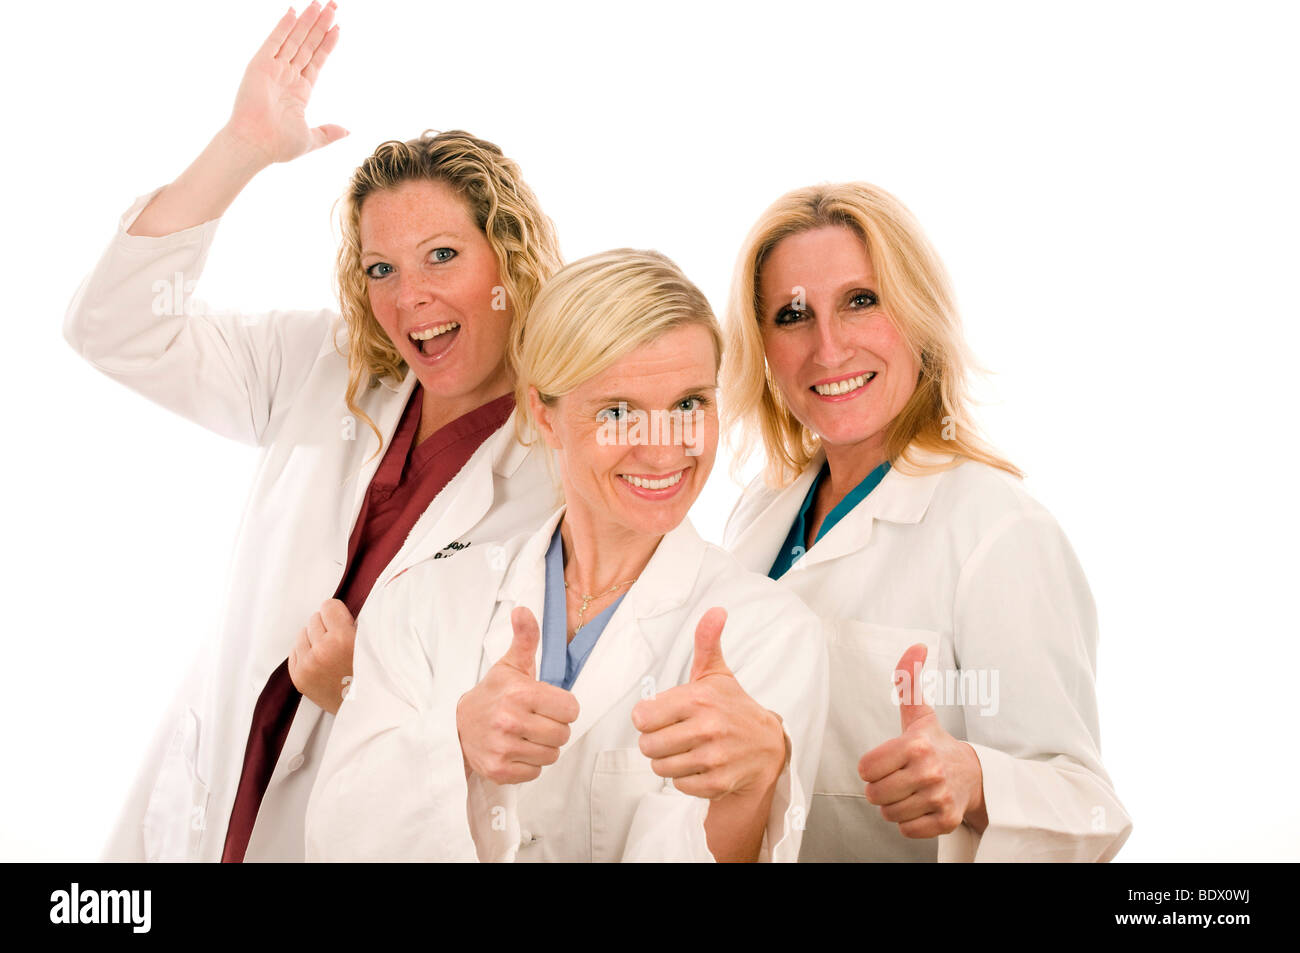 nurse nurses three group team lady ladies females teamwork pretty lab coats o.r. white jacket positive smile smiling attractive Stock Photo